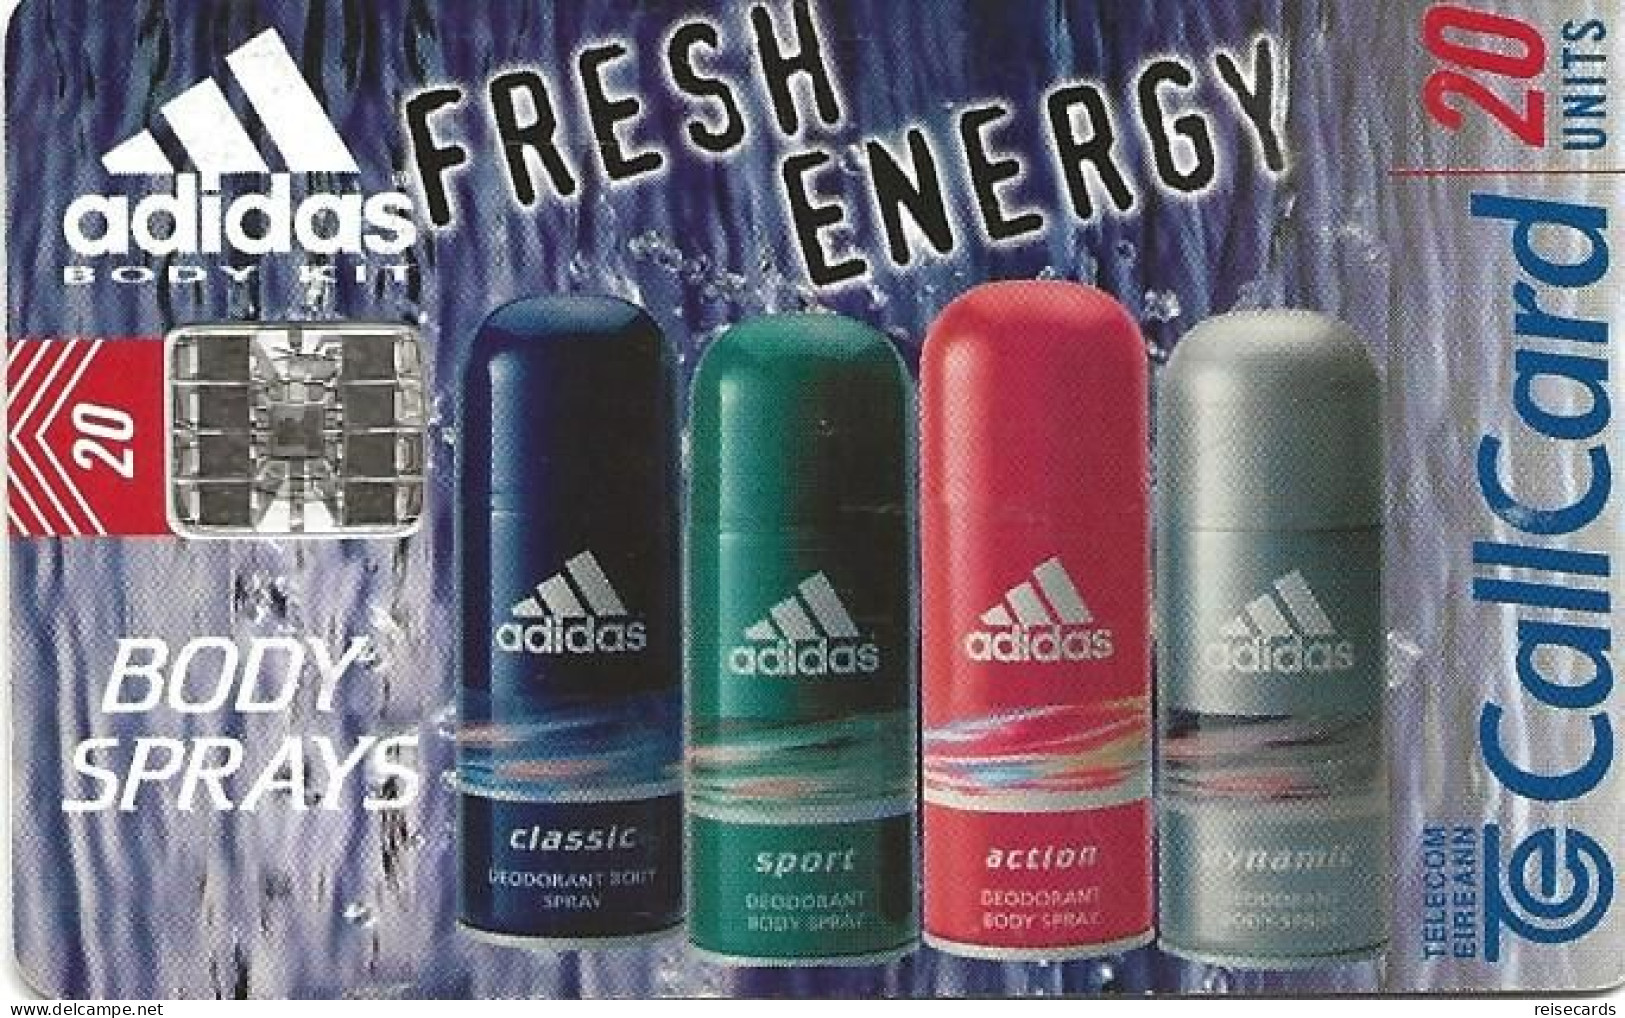 Ireland: Telecom Eireann - 1998 Adidas Body Sprays - Ireland